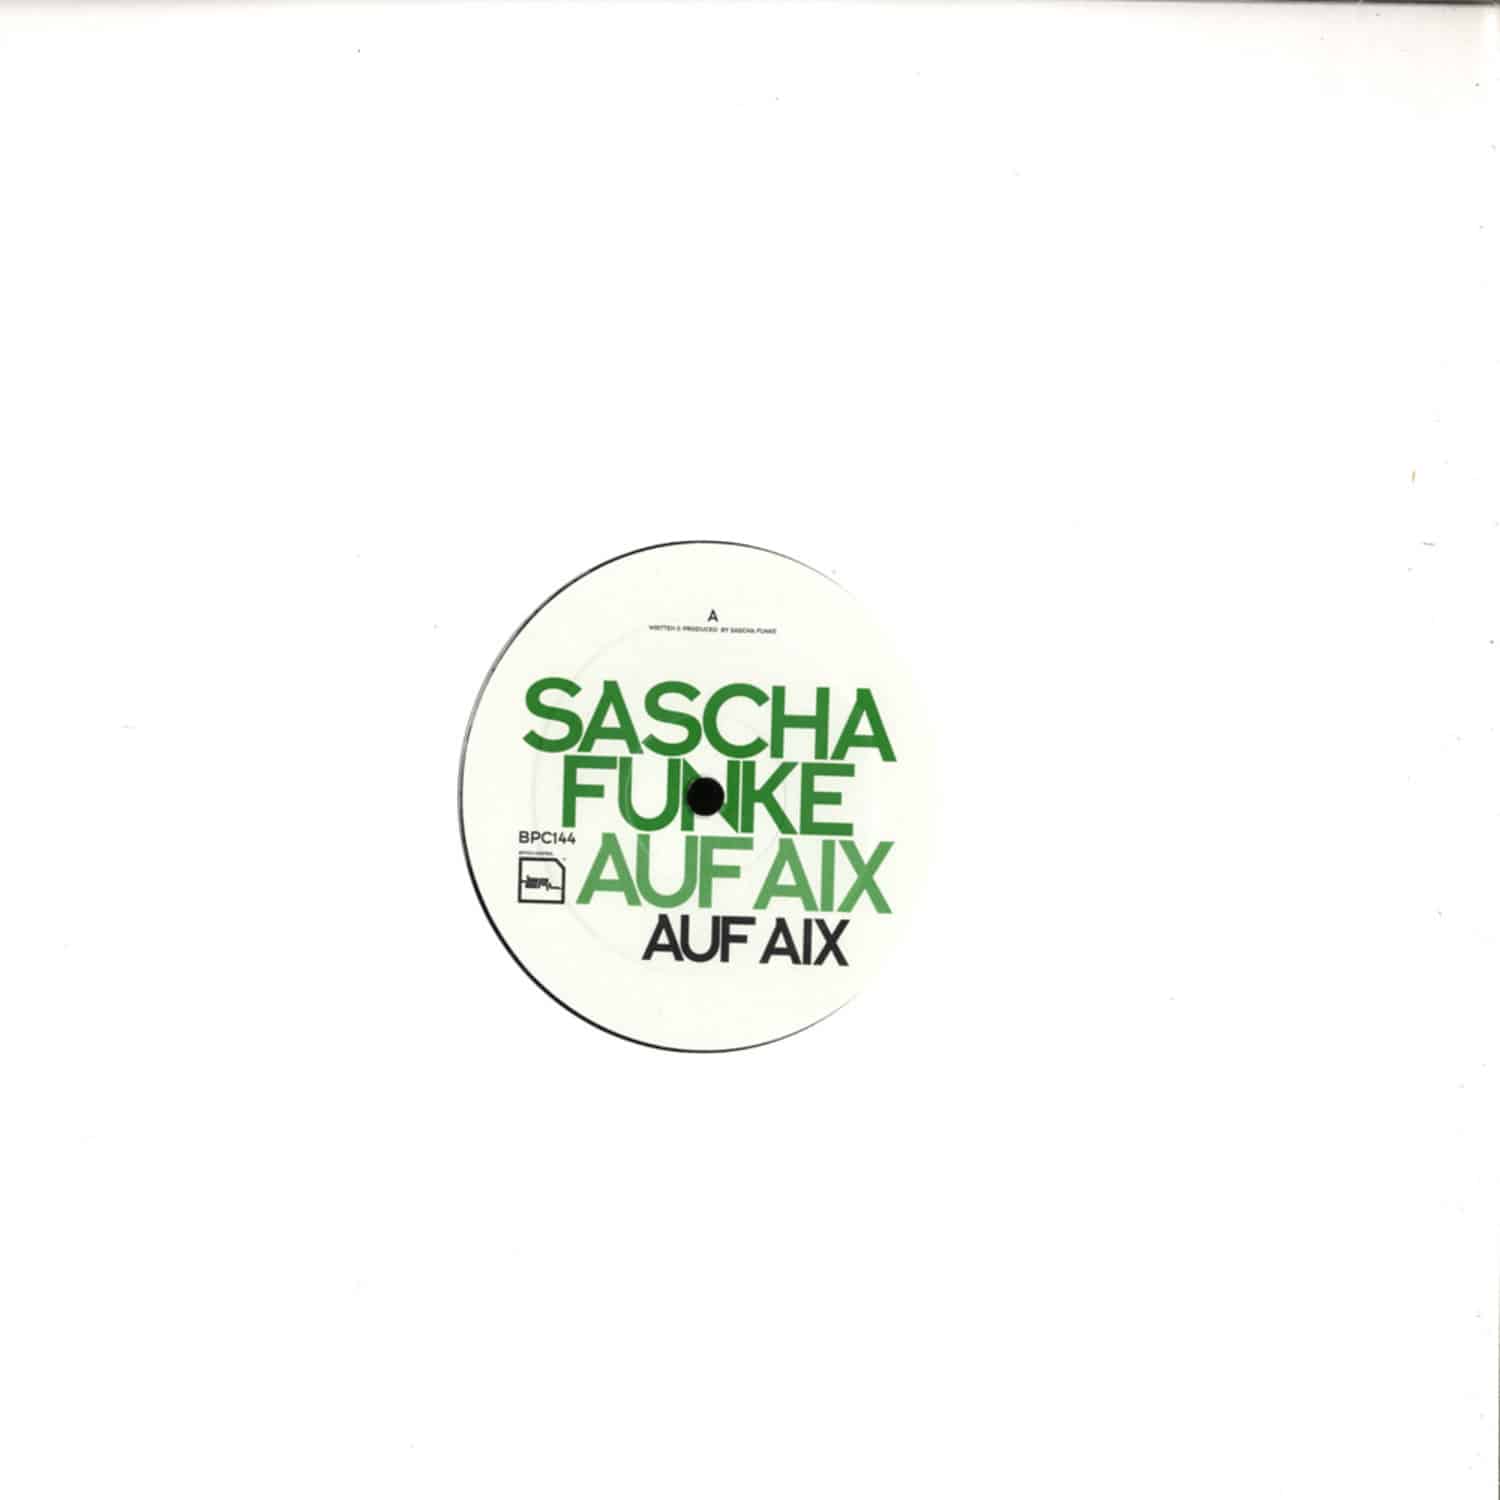 Sascha Funke - AUF AIX